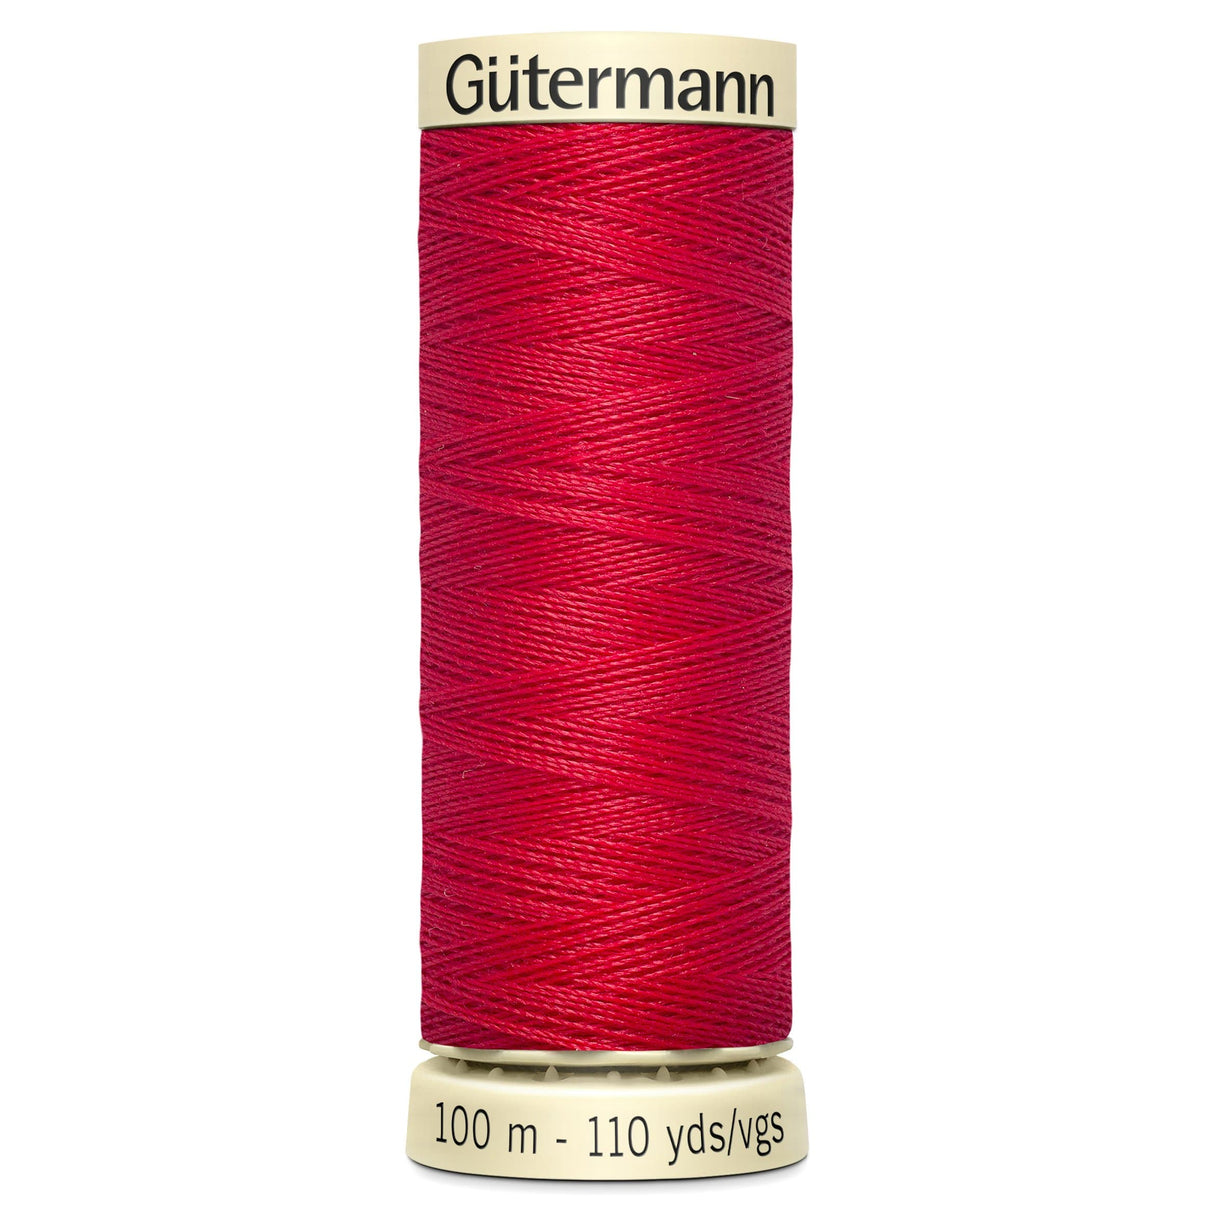 Groves Haberdashery 156 Gutermann Thread Sewing Cotton 100 m Black to Pink